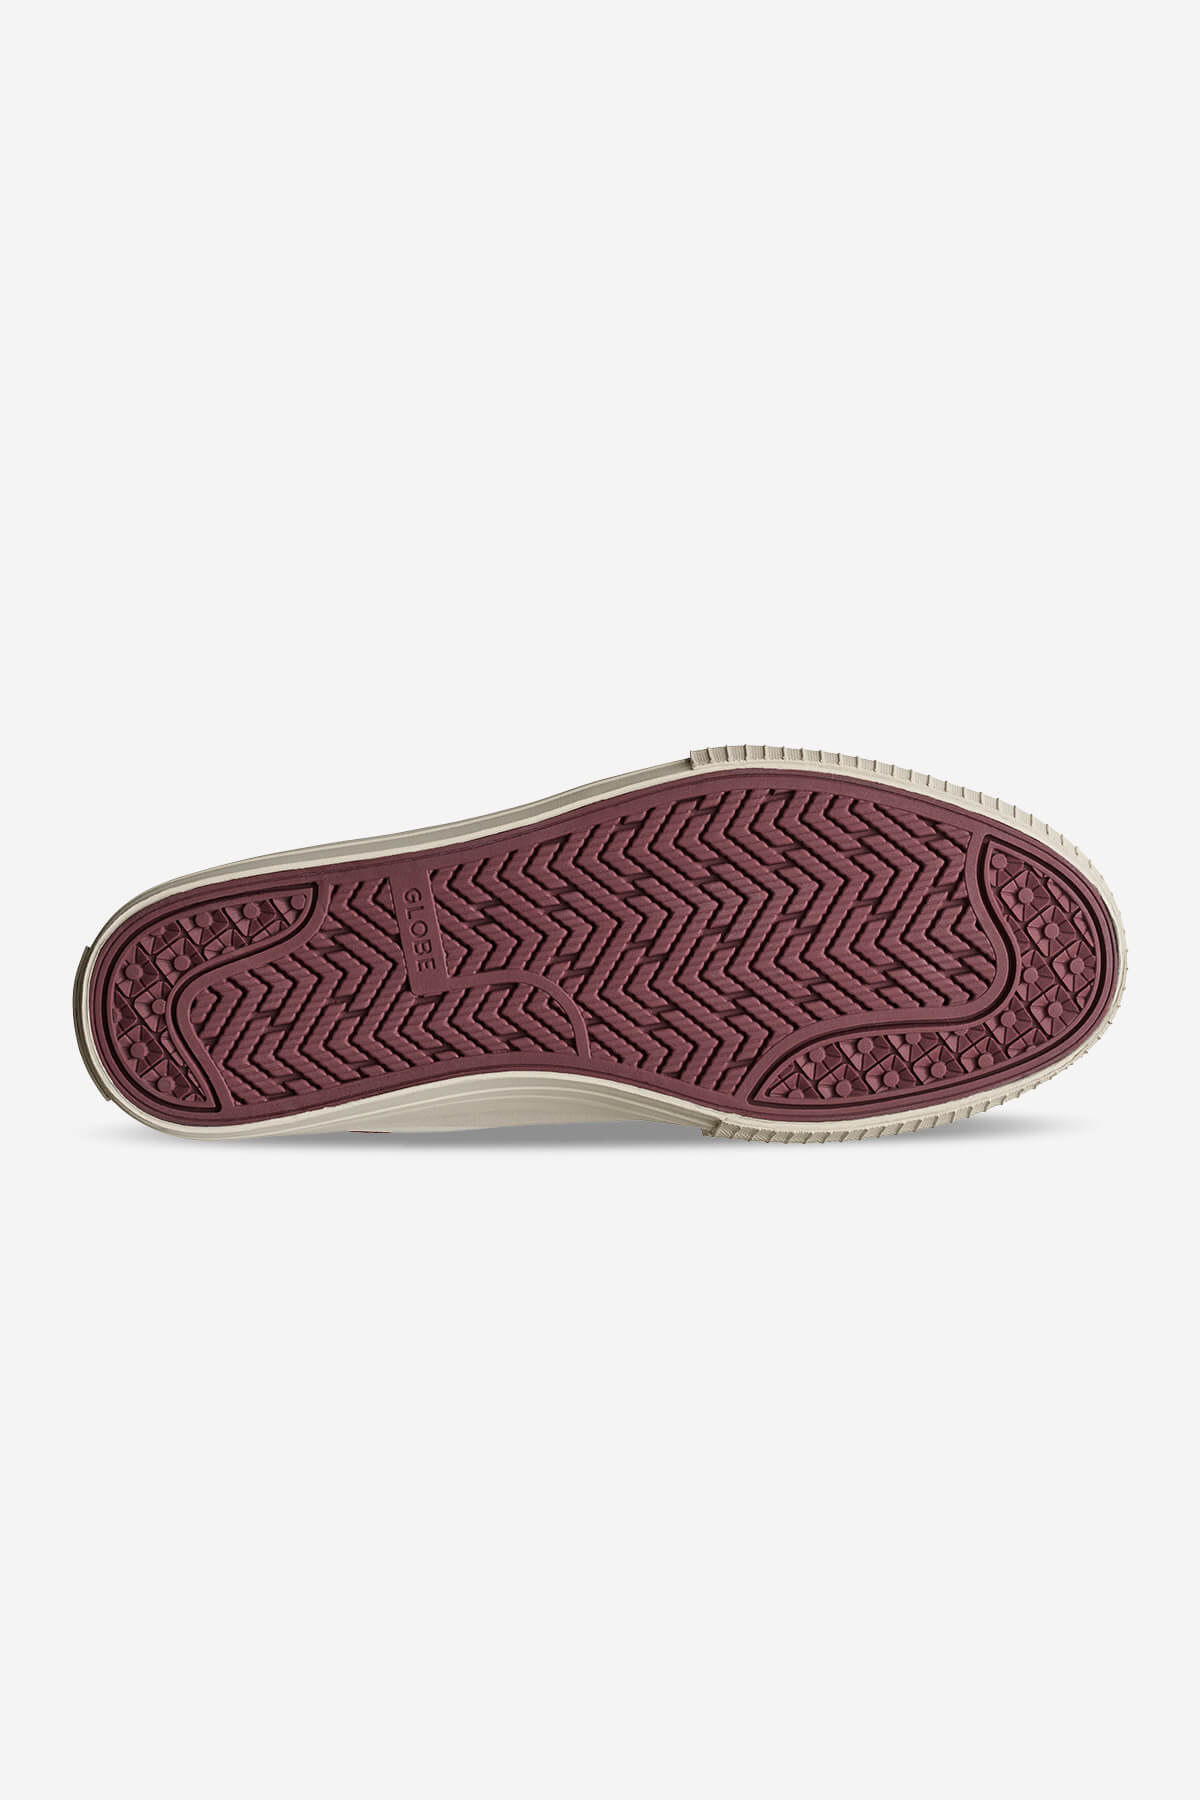 Globe - Gillette - Cream/Pomegranate - skateboard Chaussures